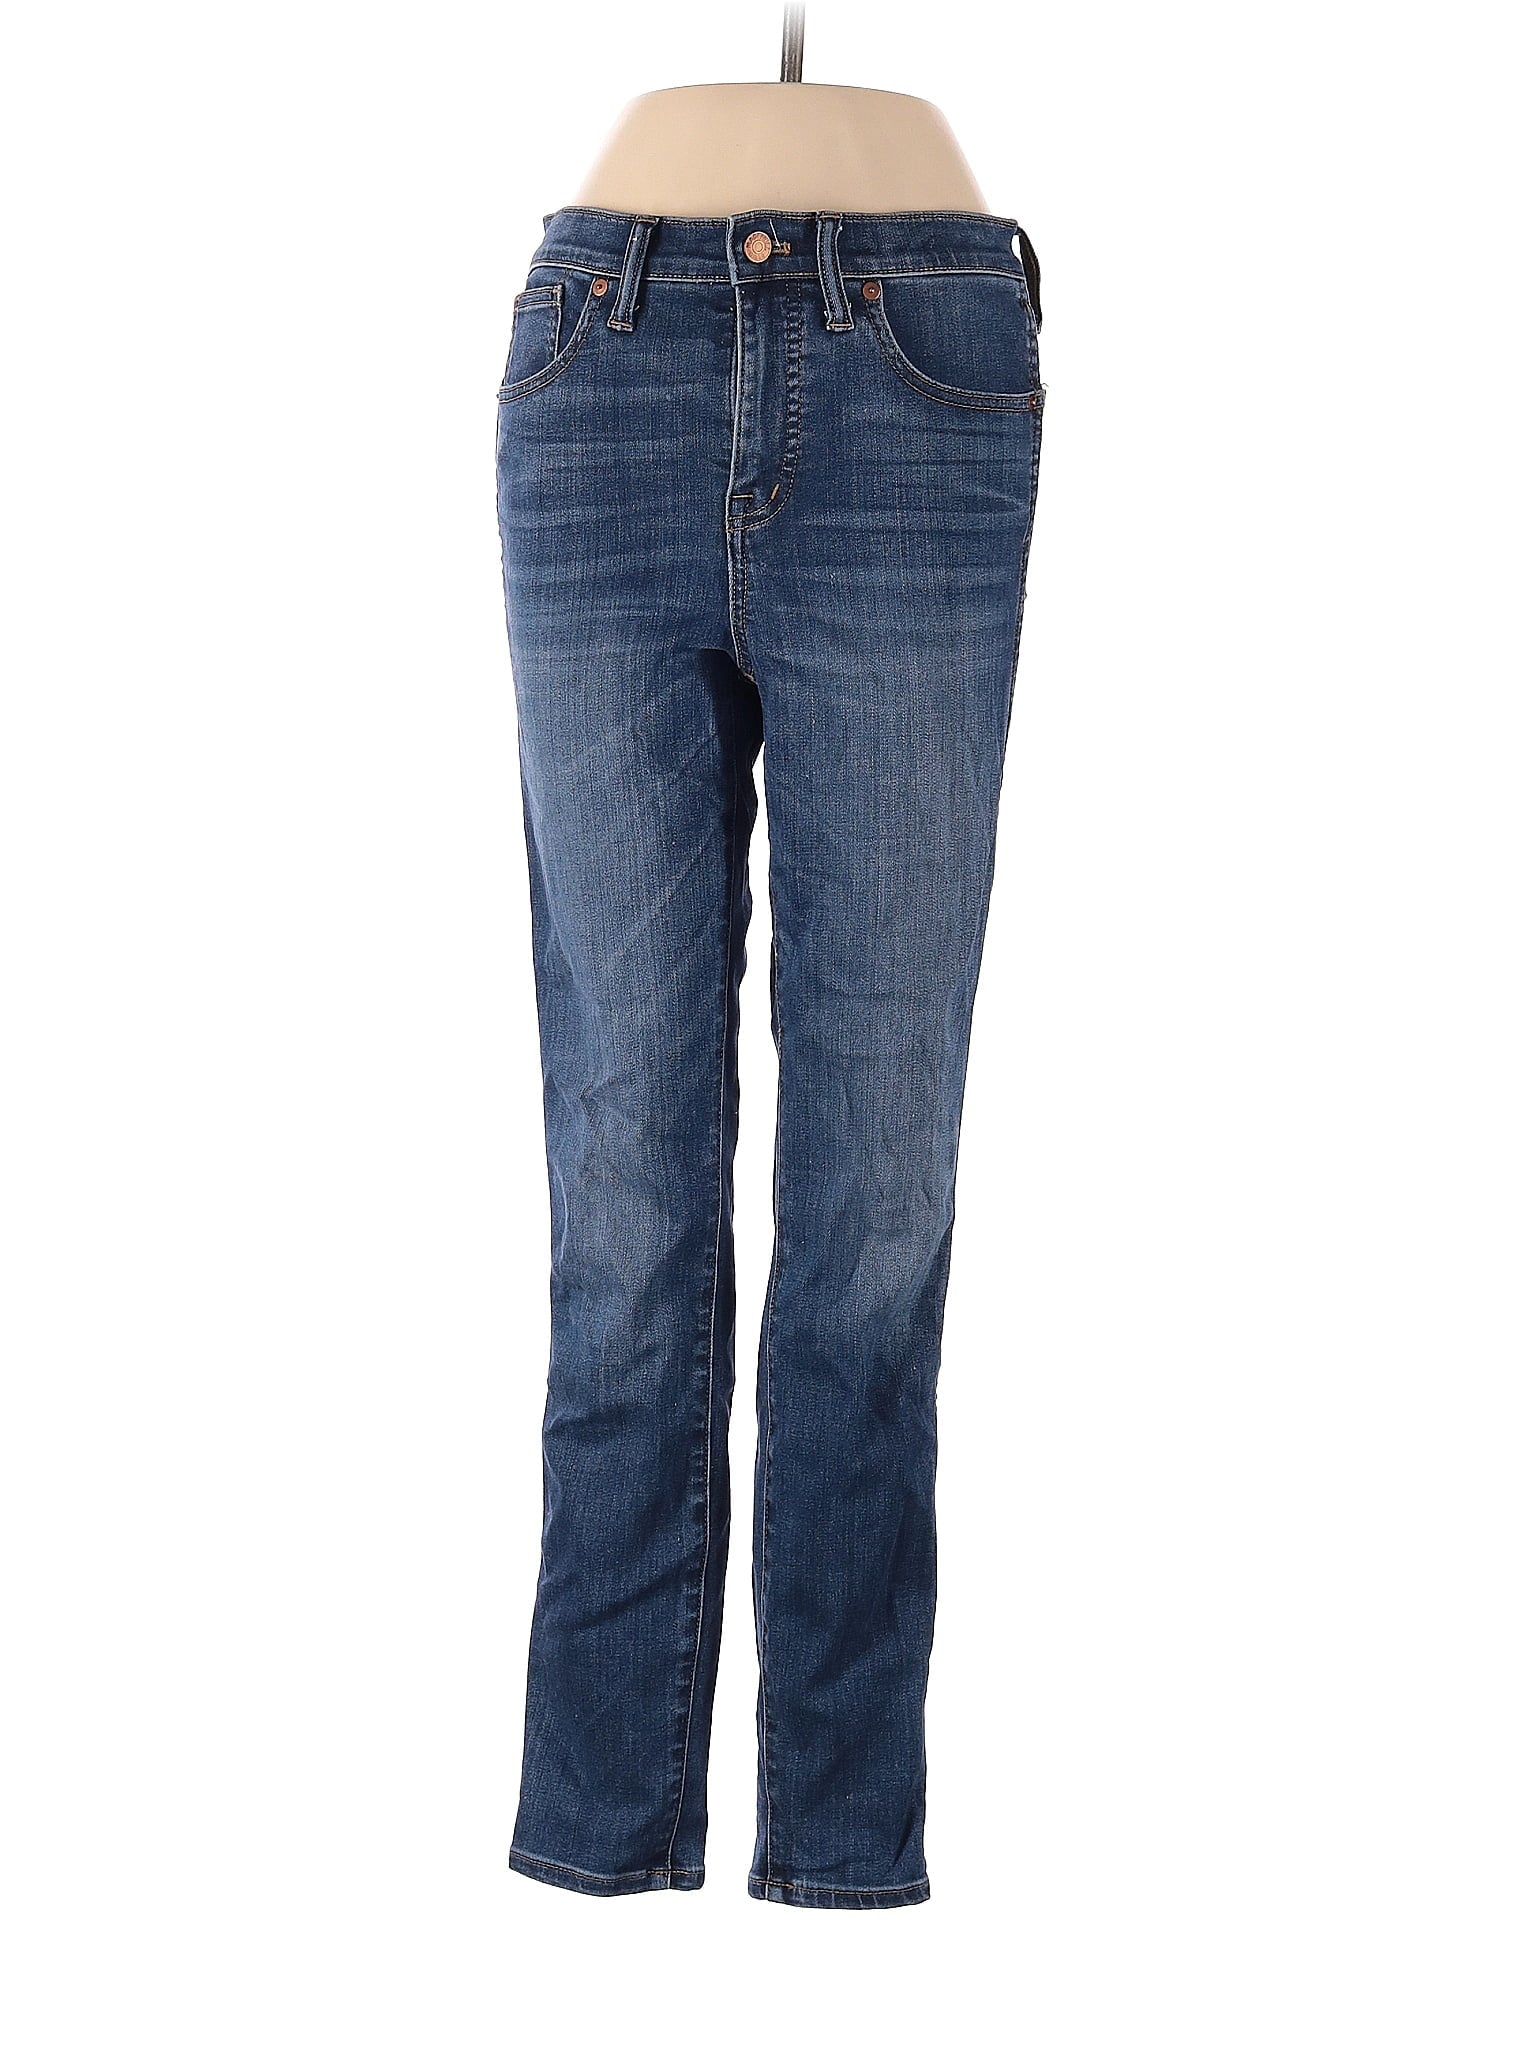 High-Rise Boyjeans Jeans in Dark Wash waist size - 26